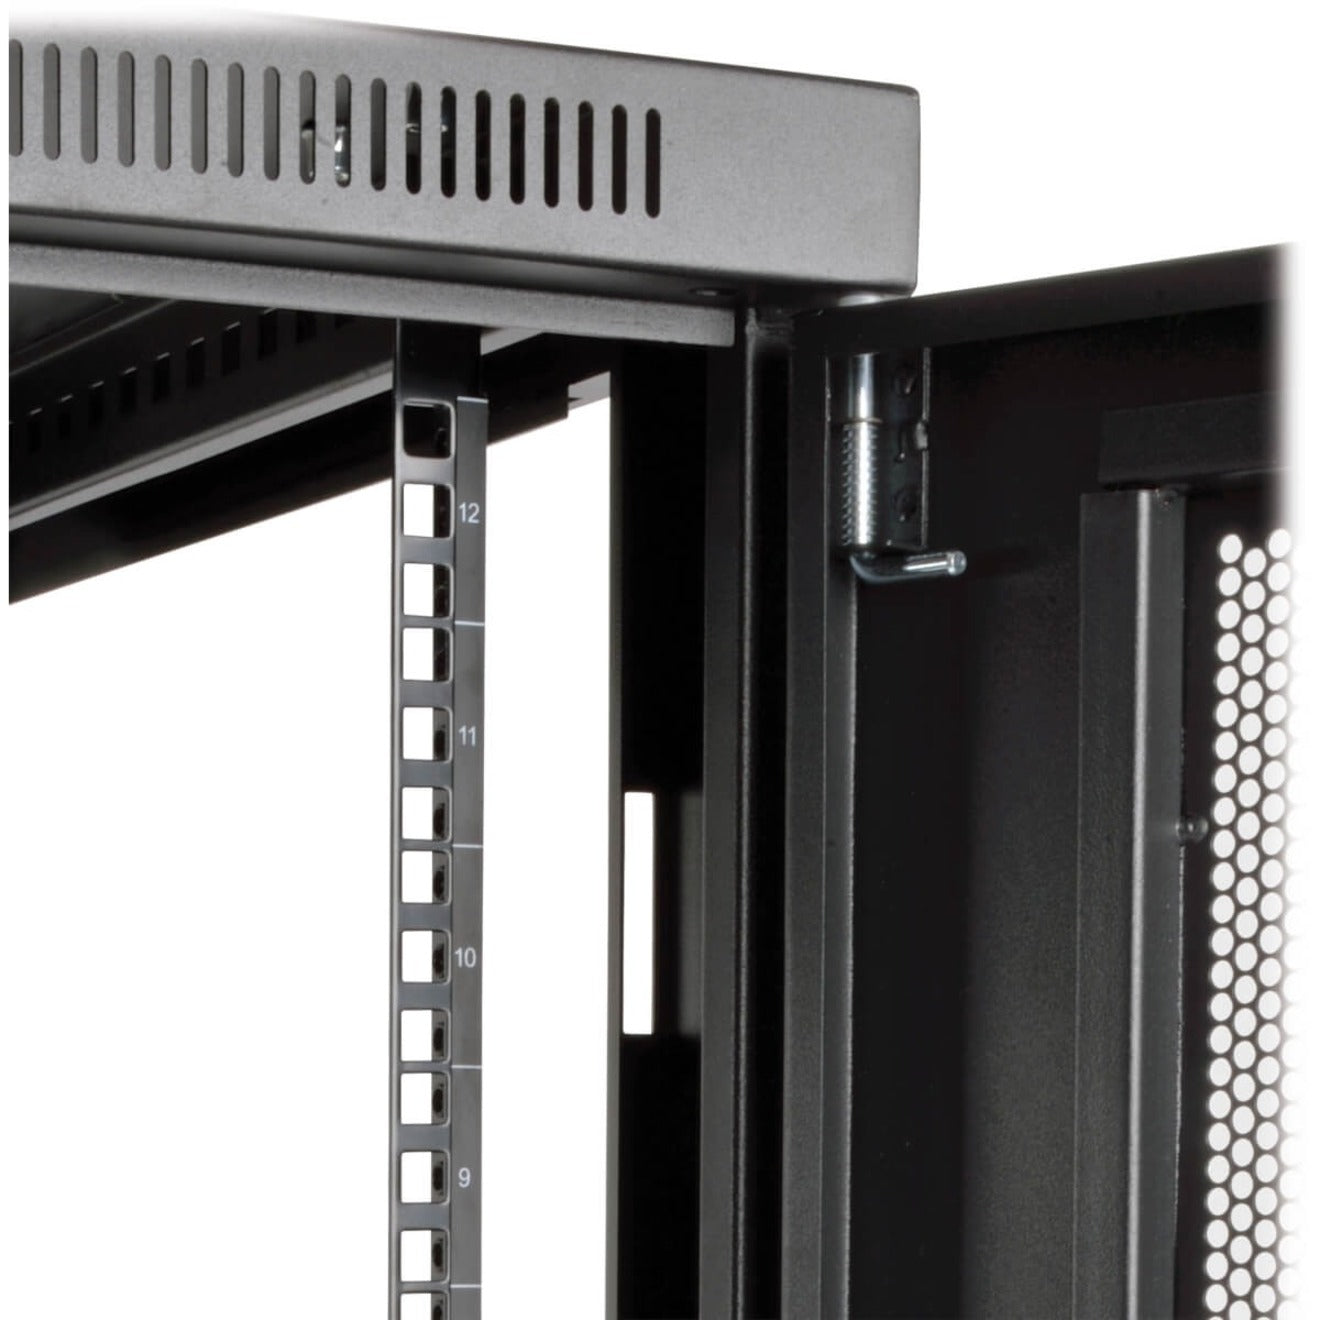 Tripp Lite SR12UB SmartRack Enclosure Rack Cabinet, Adjustable Mounting Depths, Cable Access Openings, 12U